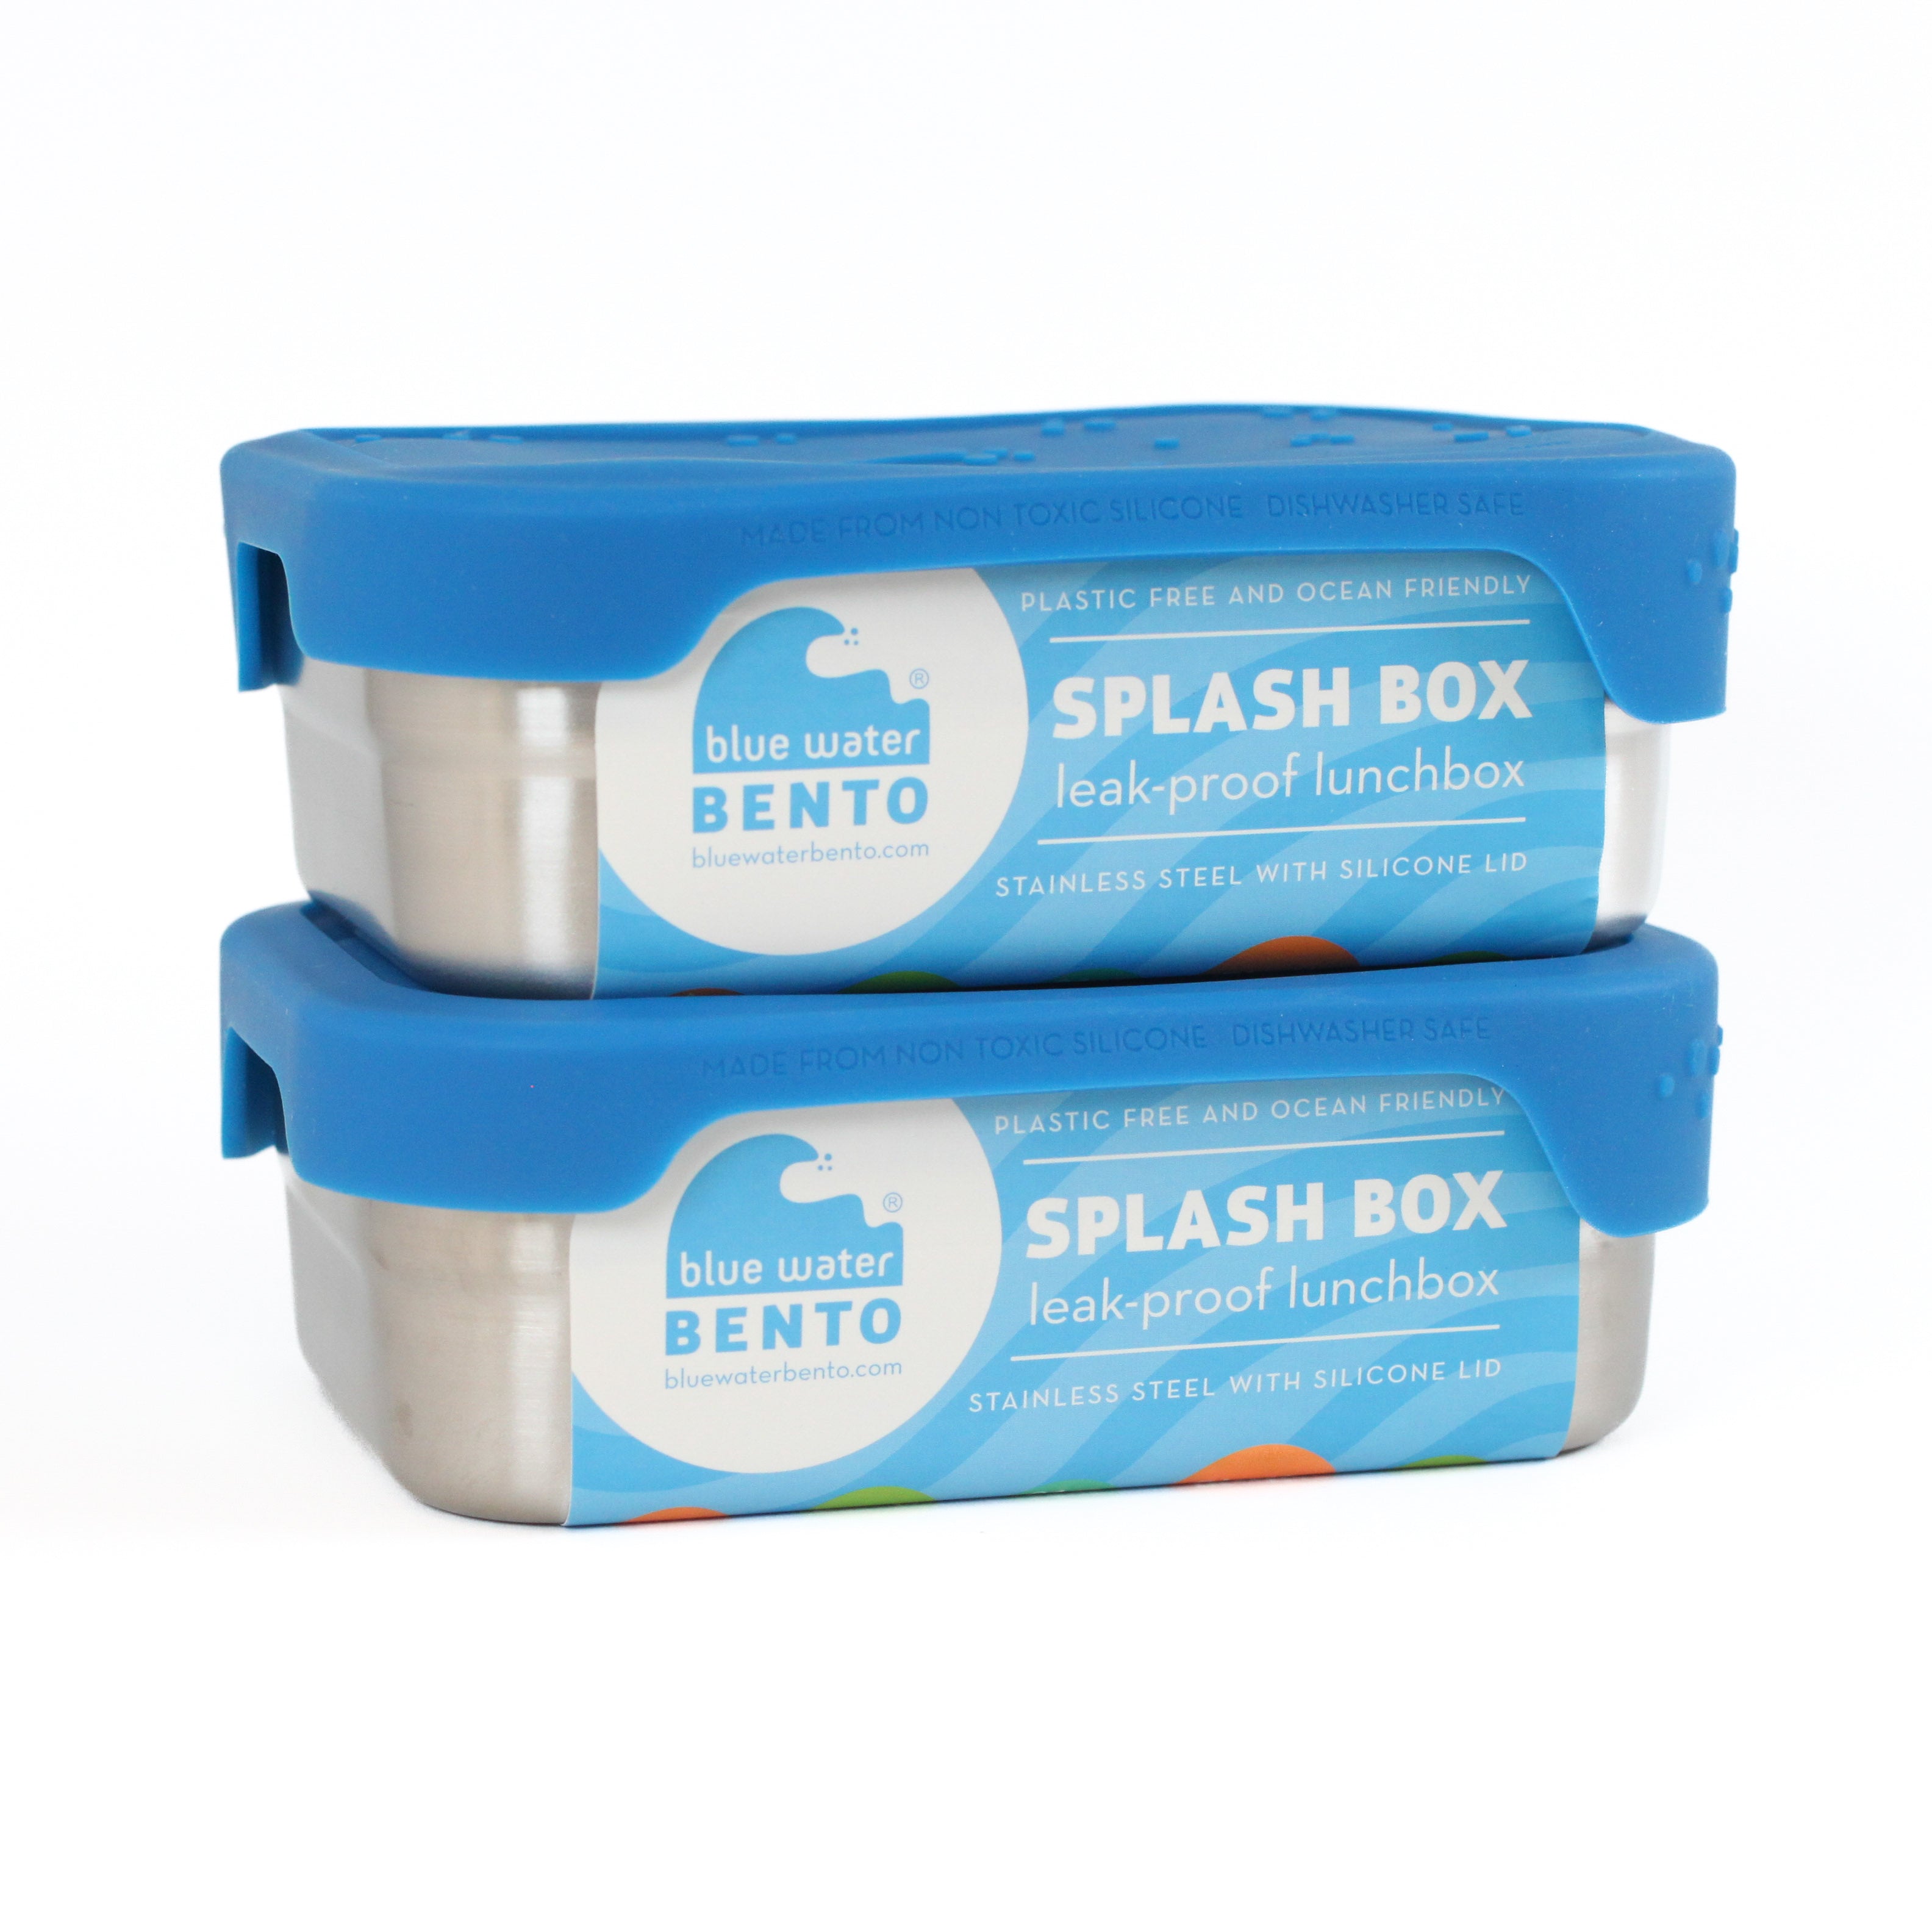 ECOLunchbox Rectangular Splash Box Container